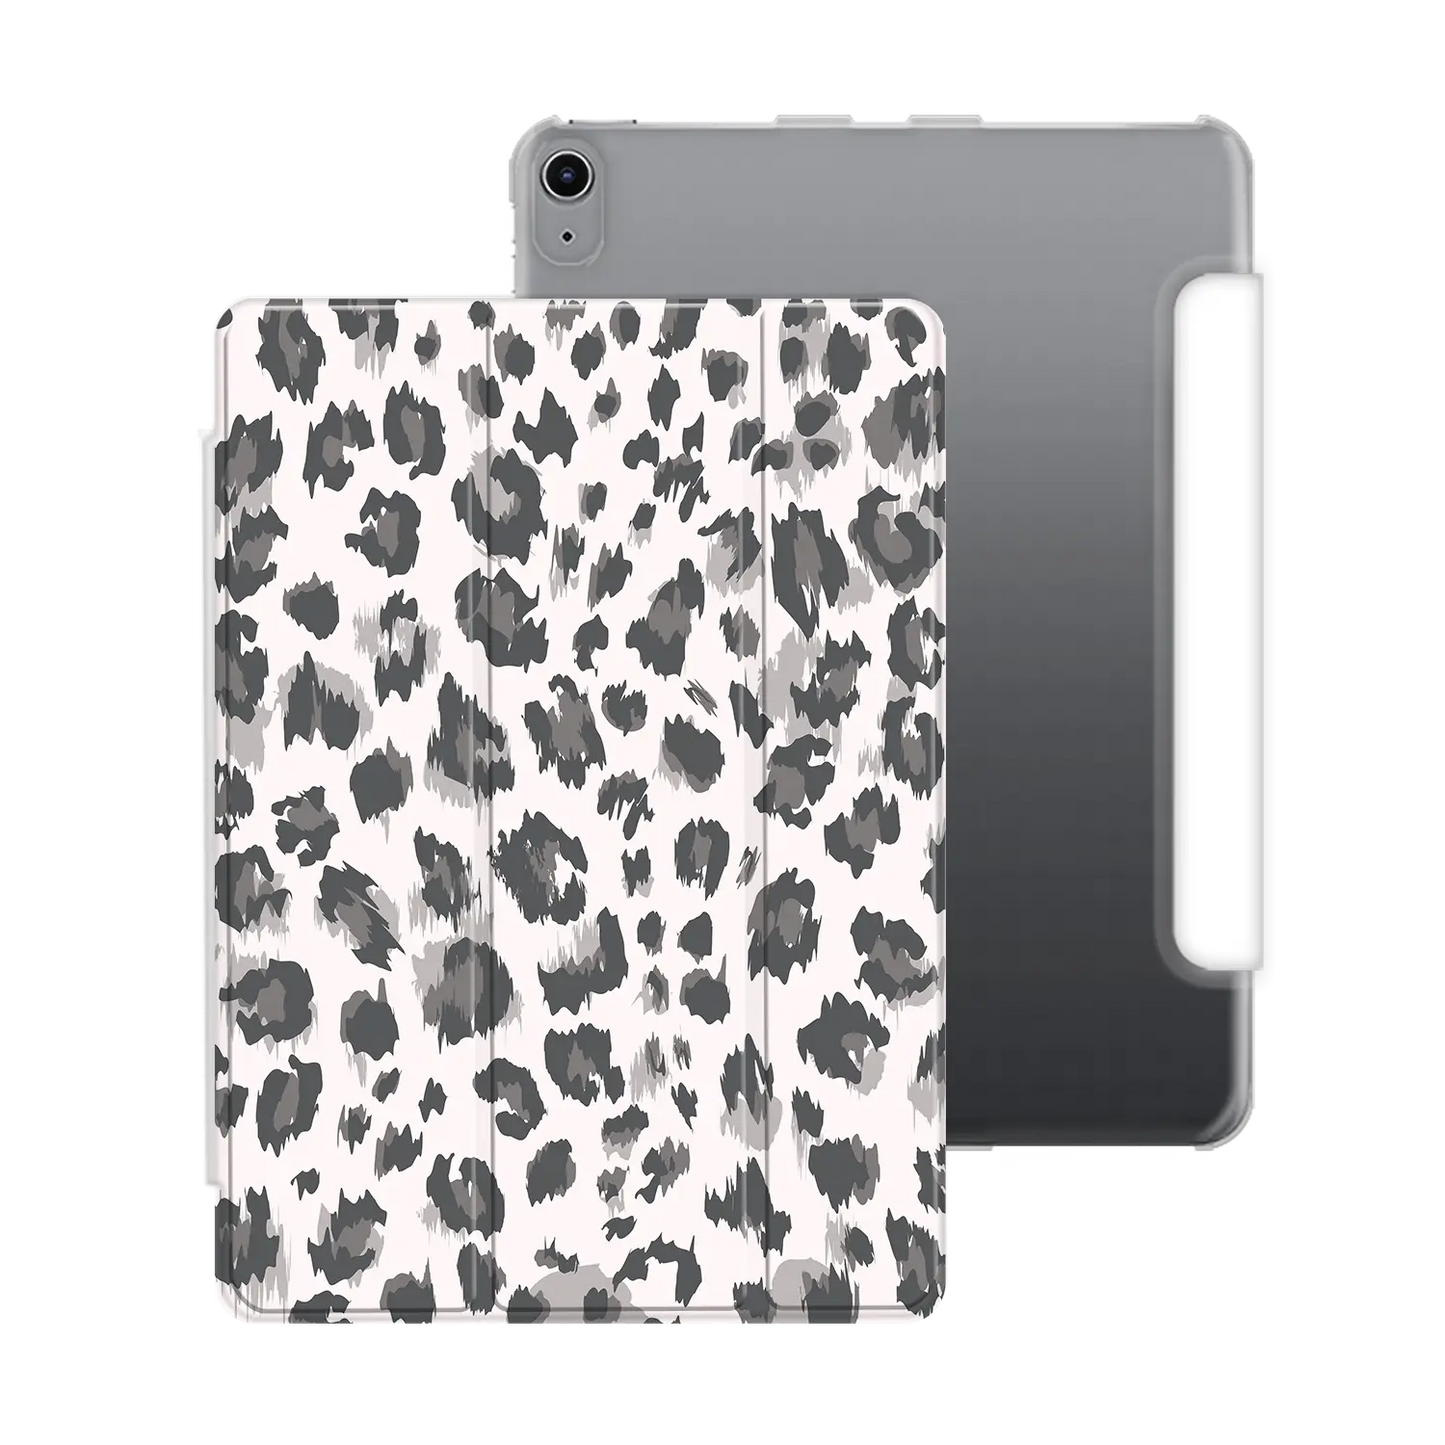 Wild Cheetah Print - Personalised iPad Case